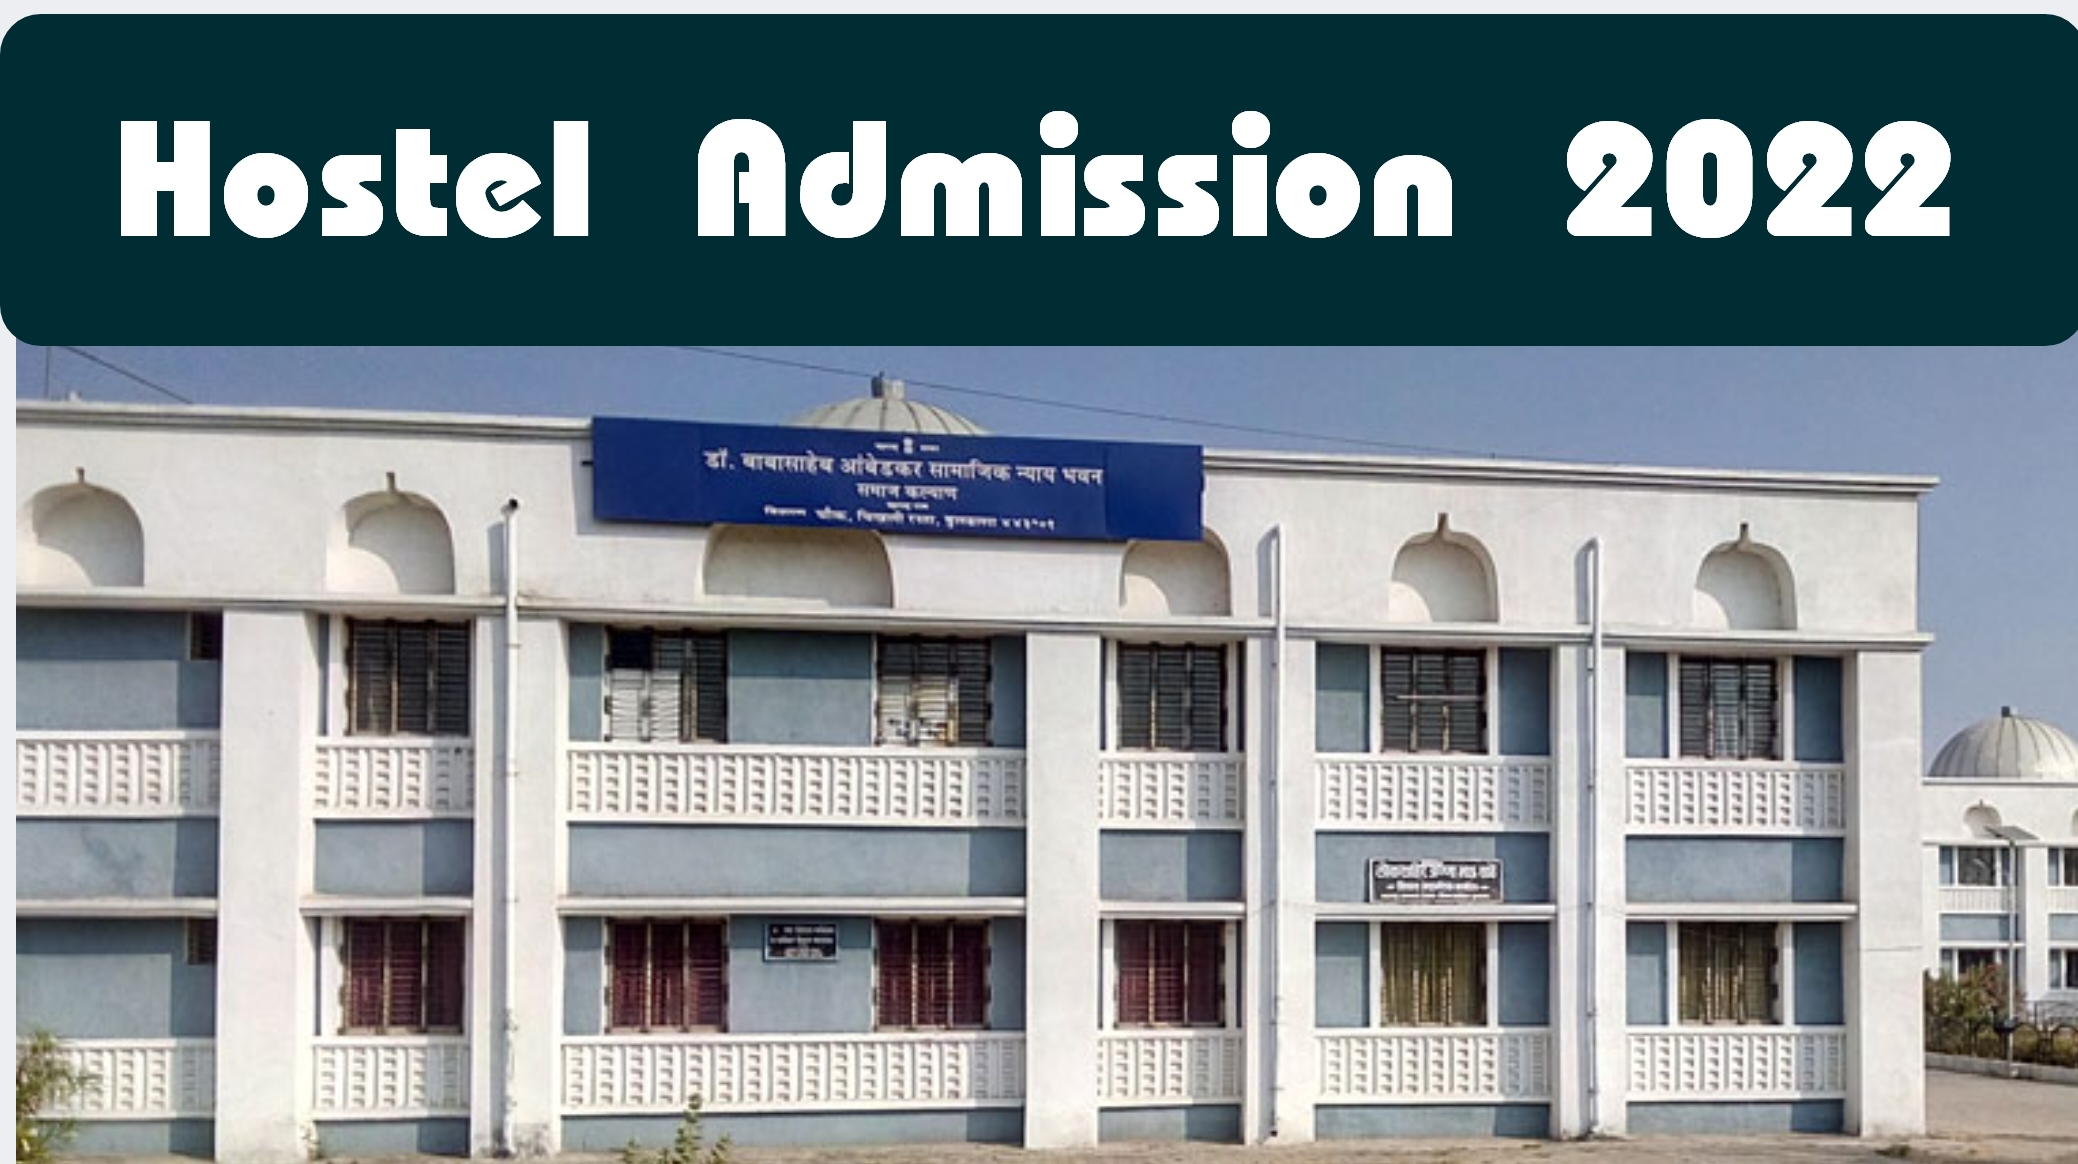 Samaj kalyan hostel Admission